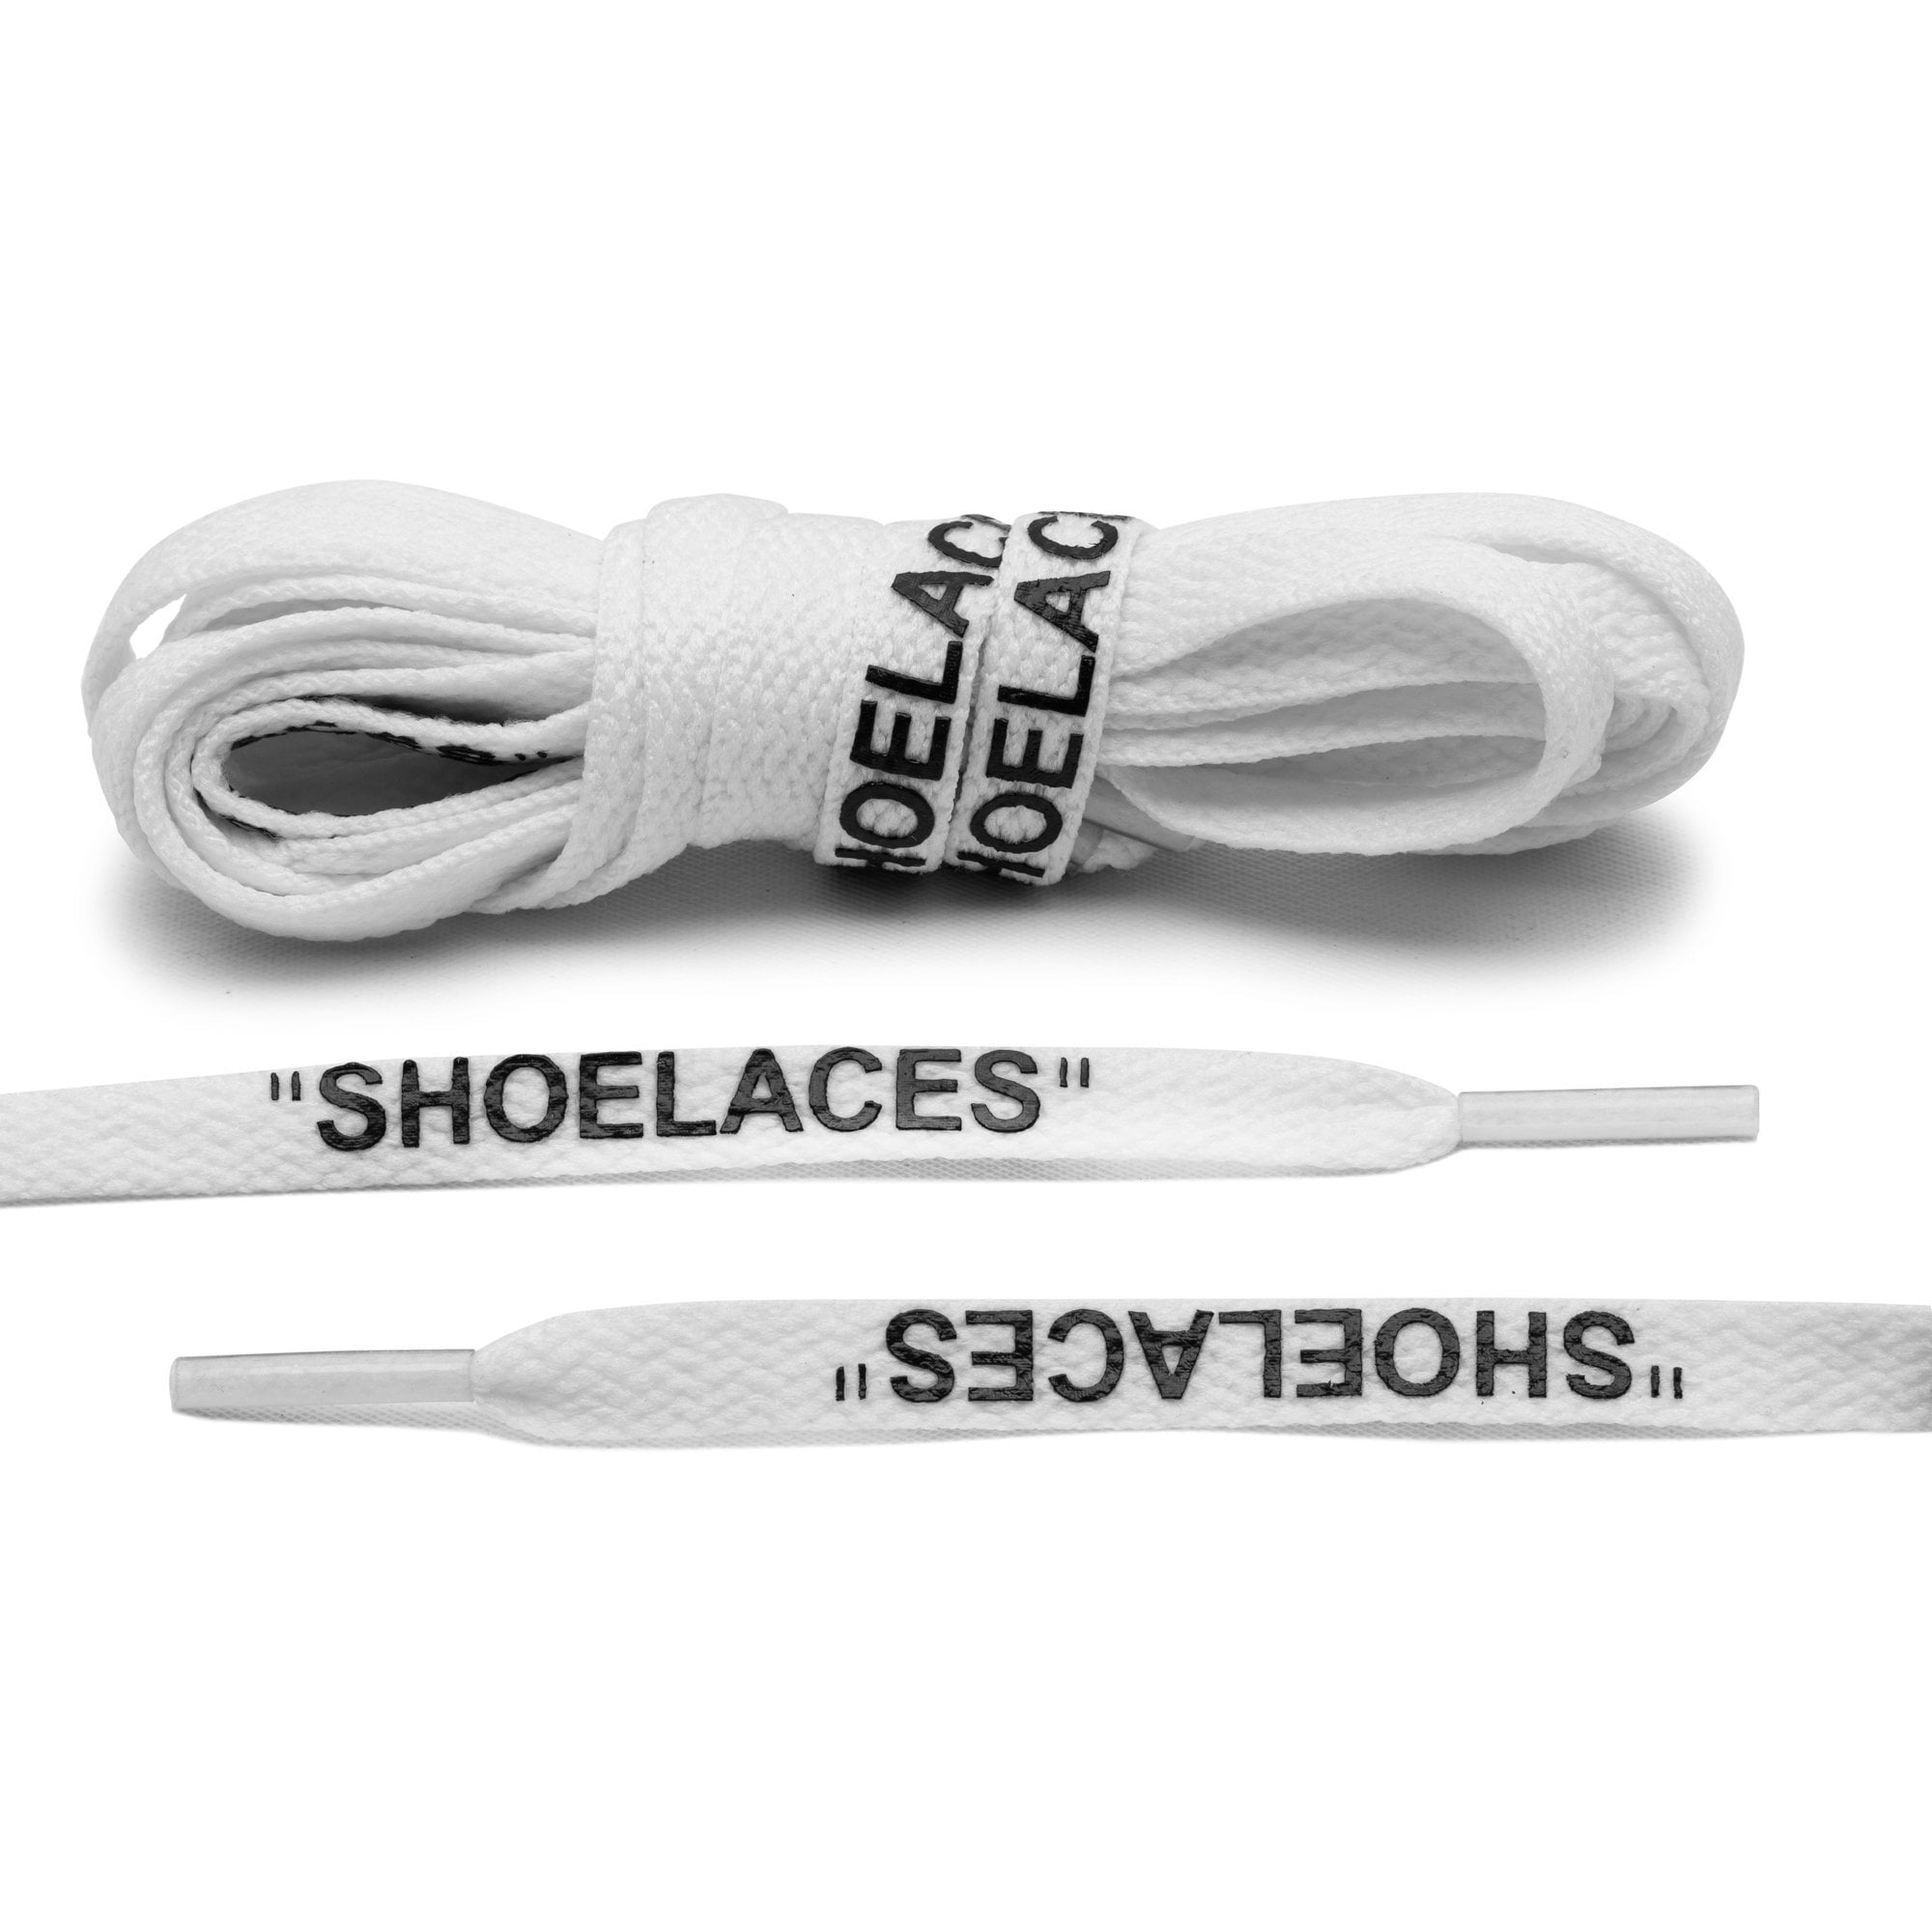 Off-White Style "SHOELACES" | Shoe Laces